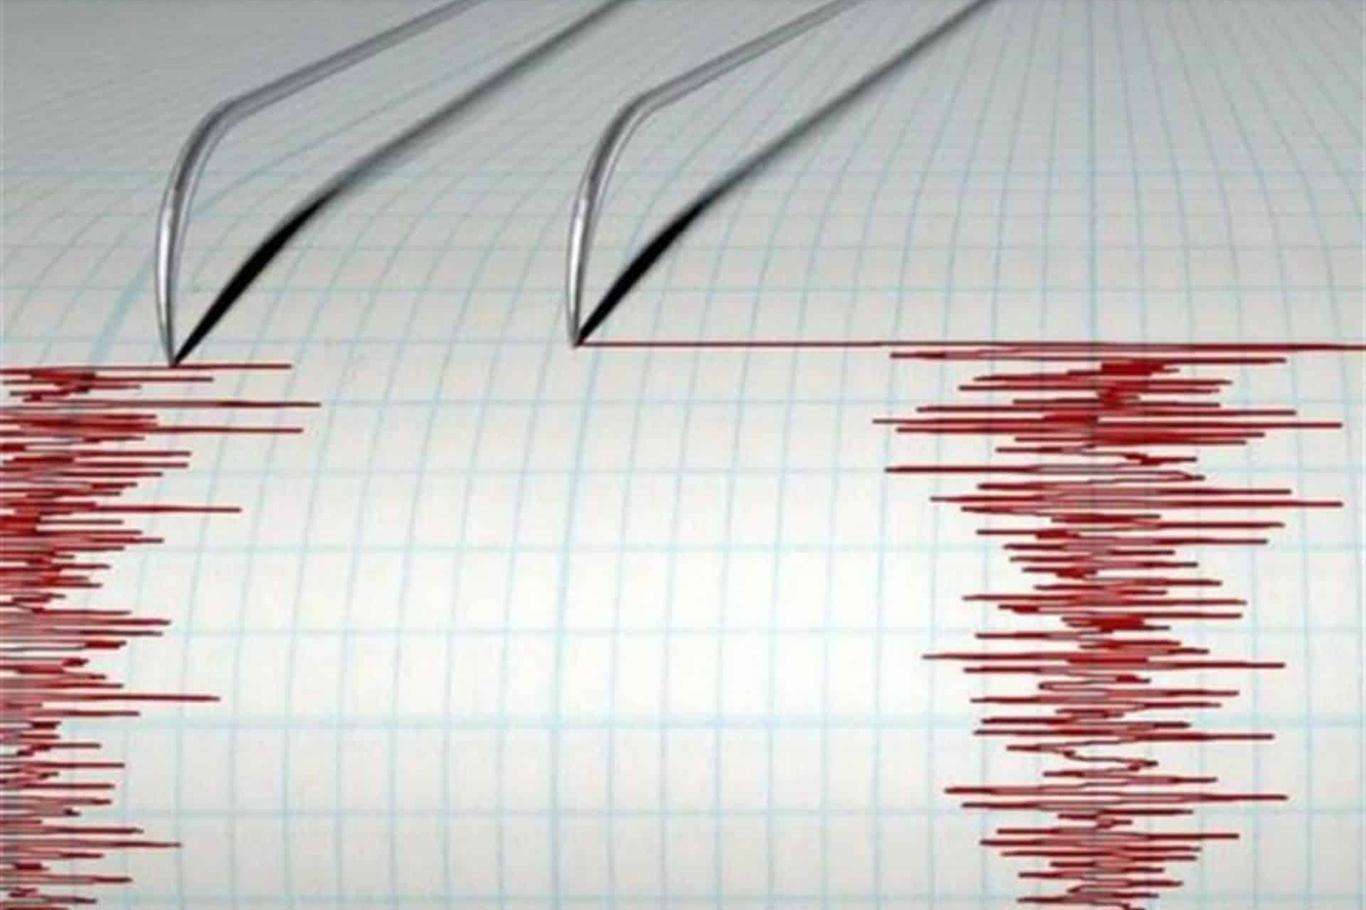 Magnitude 6.4 earthquake hits Argentina